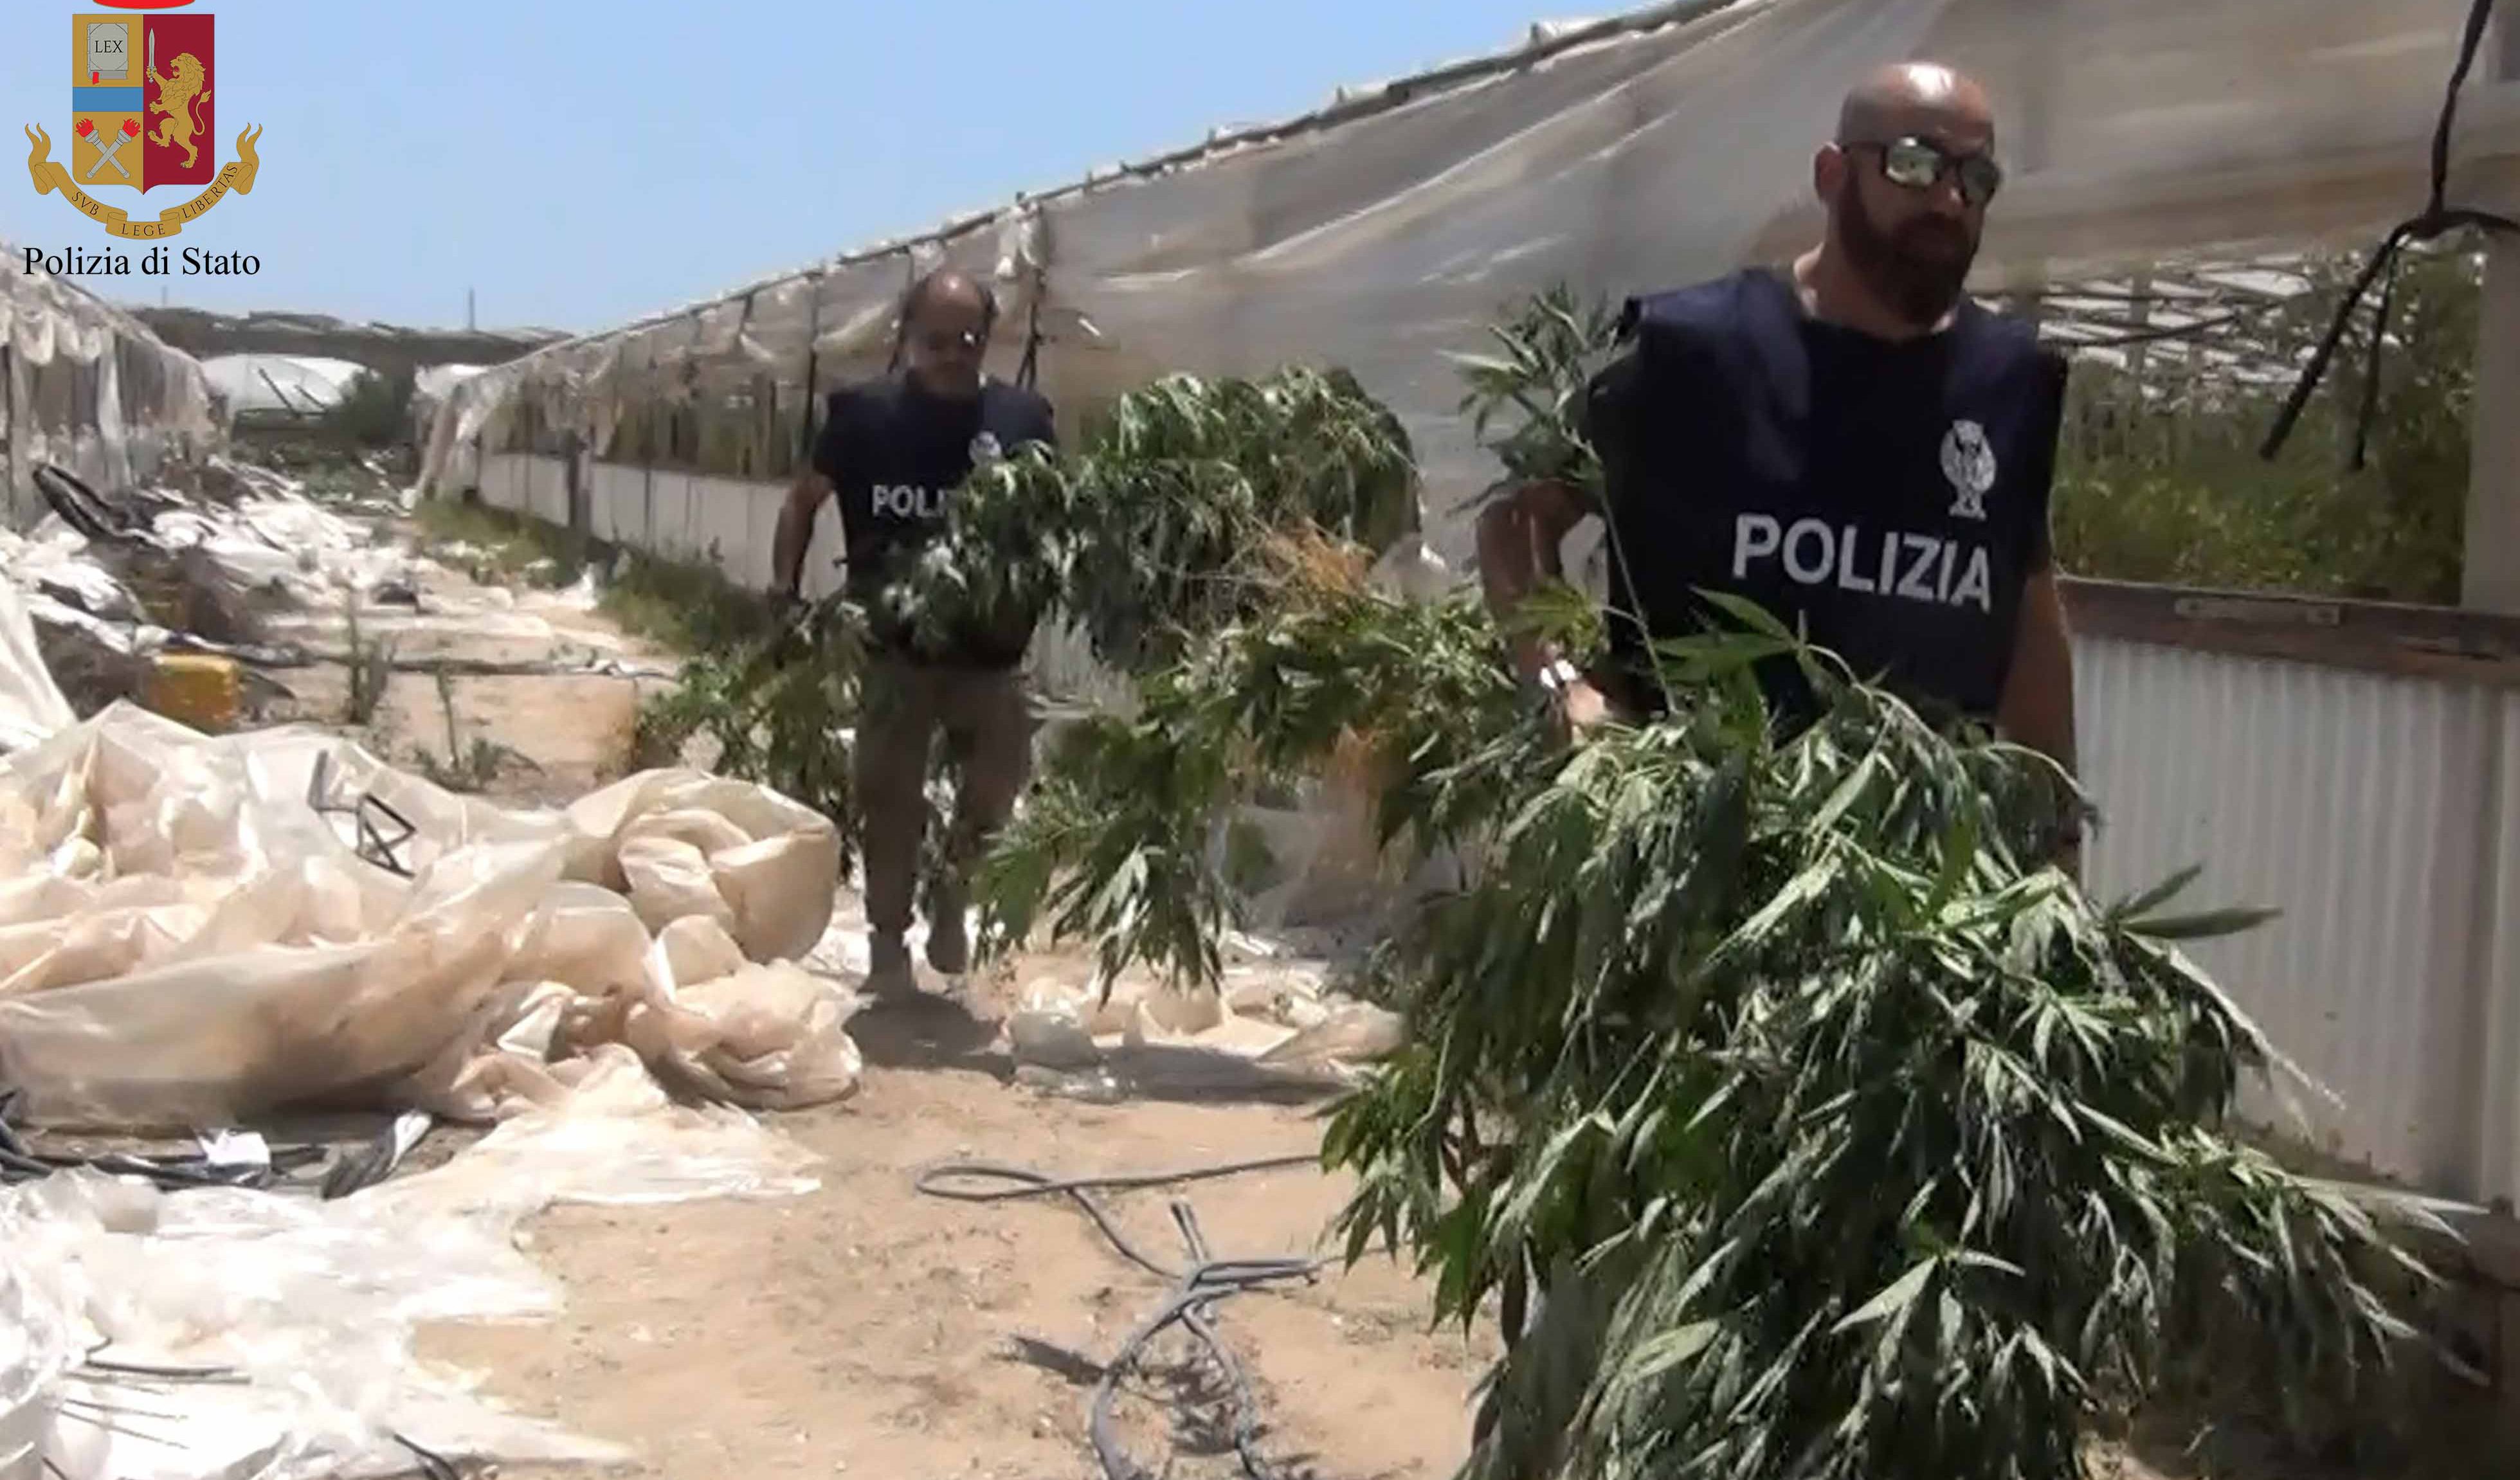  Piante di marijuana tra i pomodori: arrestati quattro stranieri ad Acate